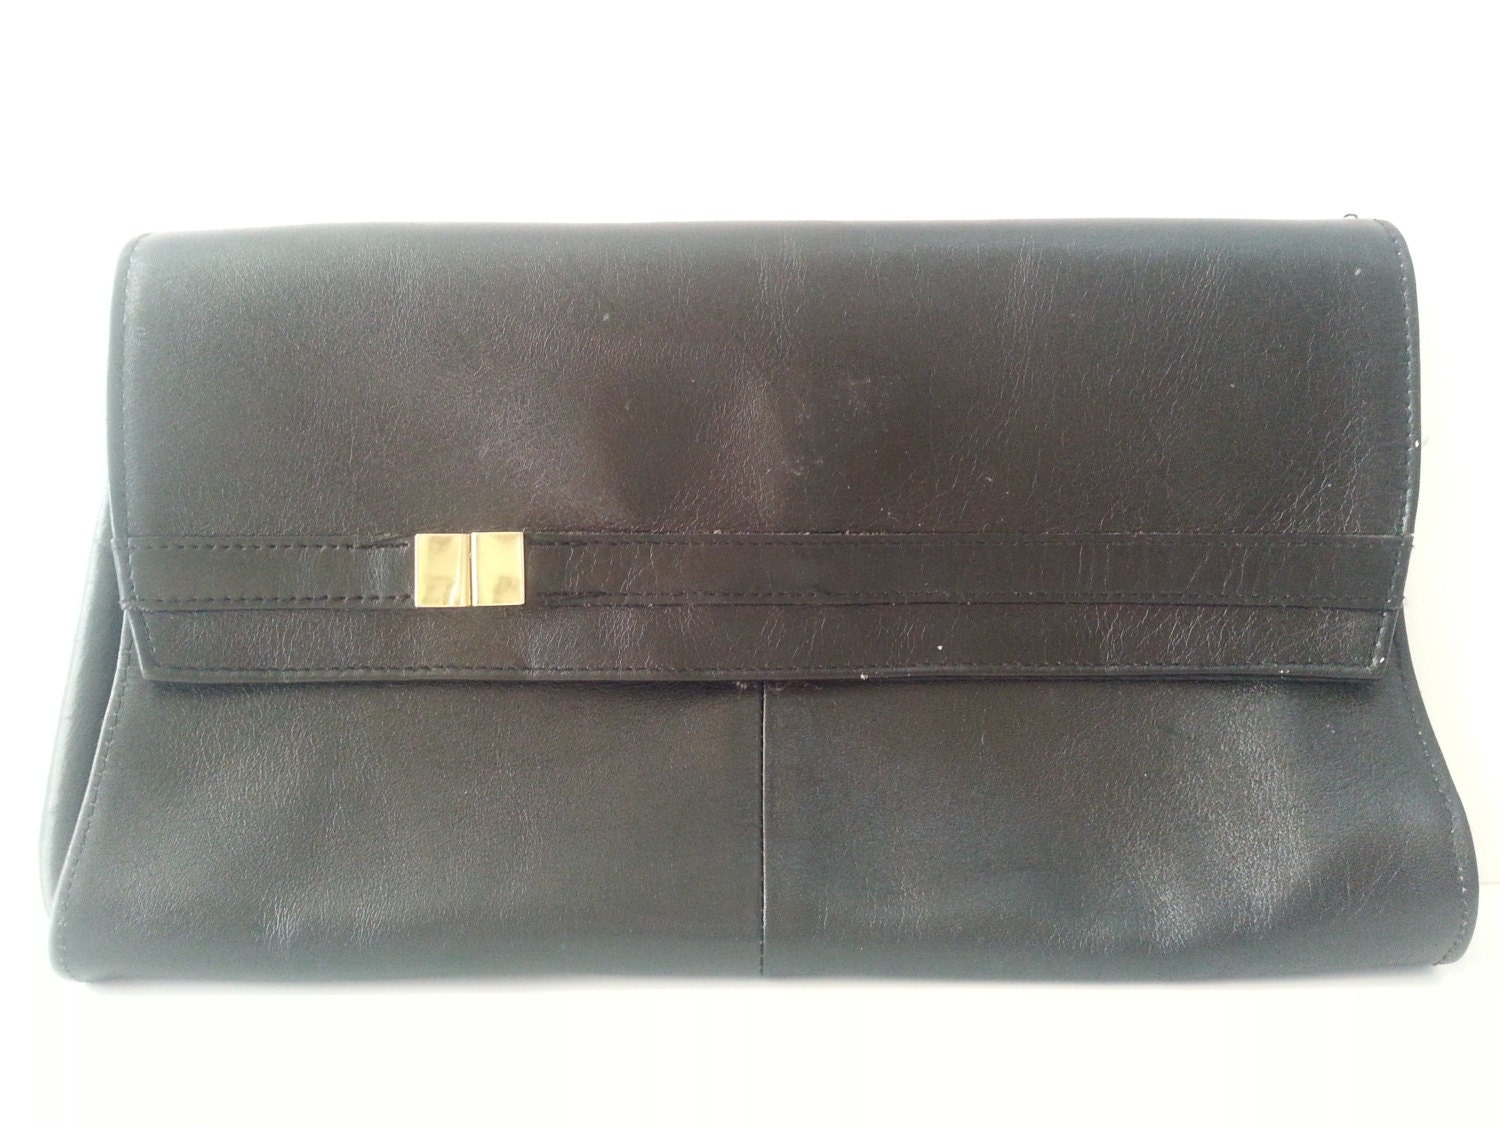 Vintage genuine leather contessa black clutch purse by 1943vtg